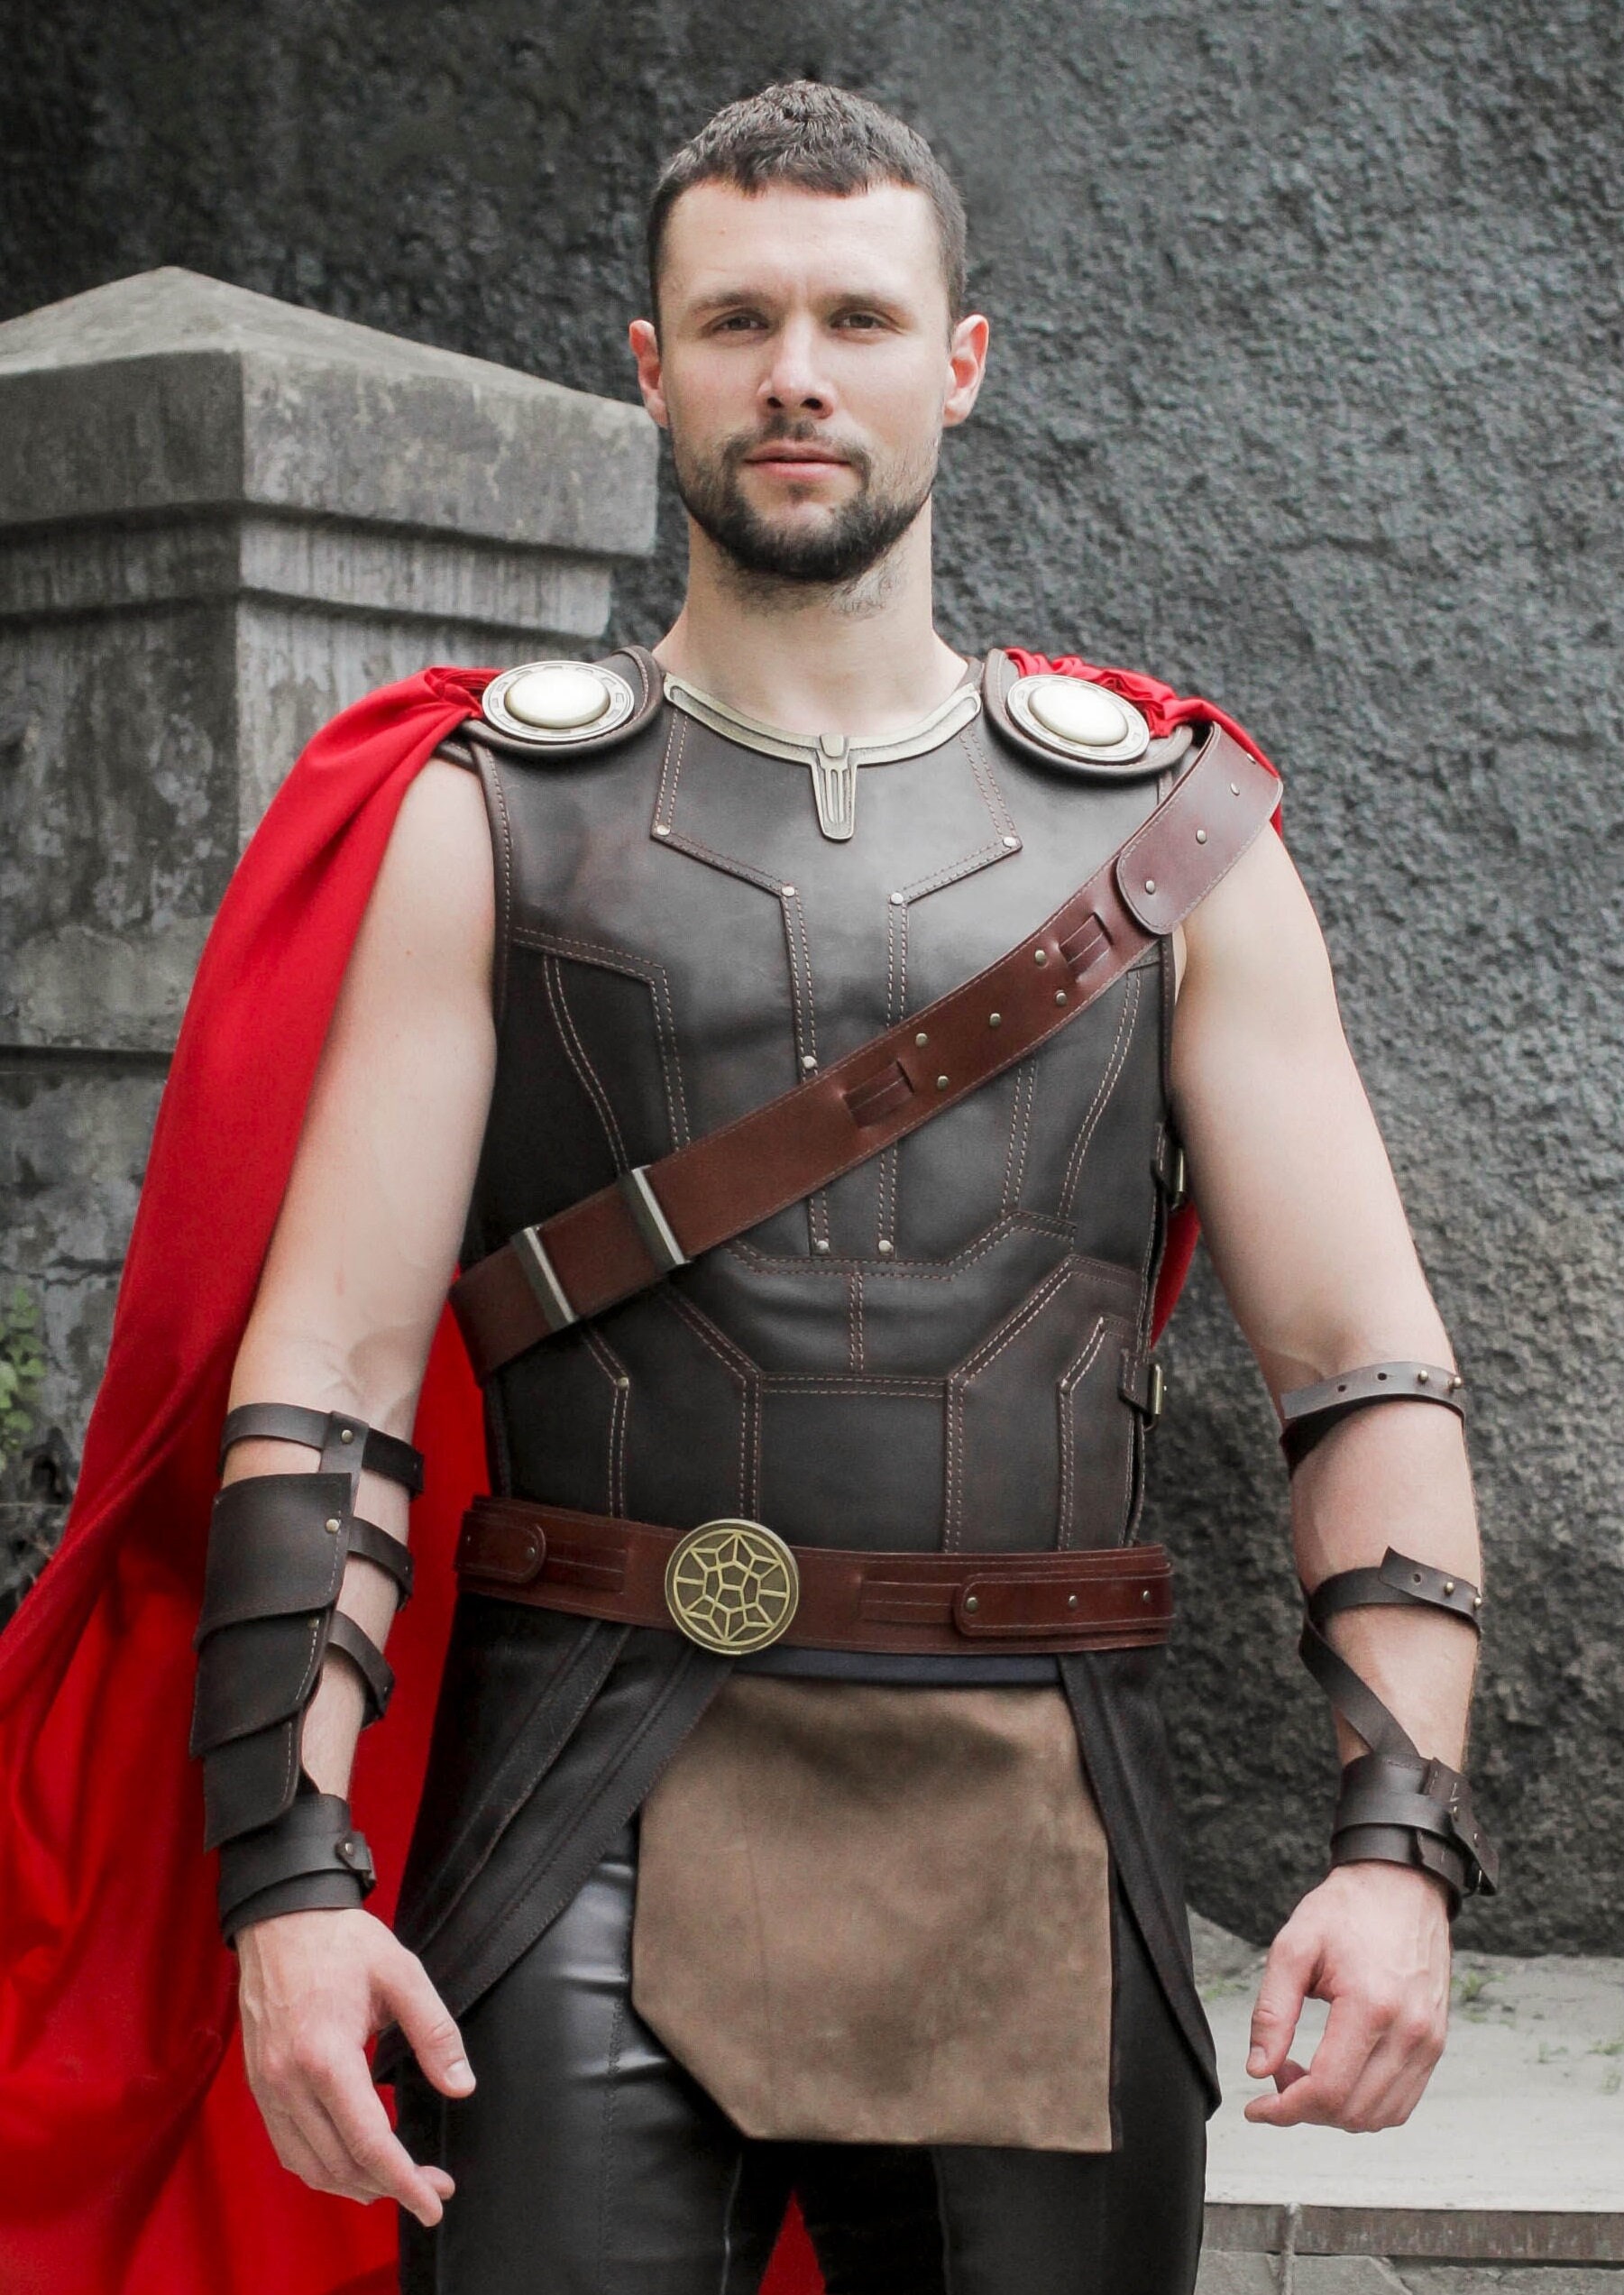 Thor costume -  France